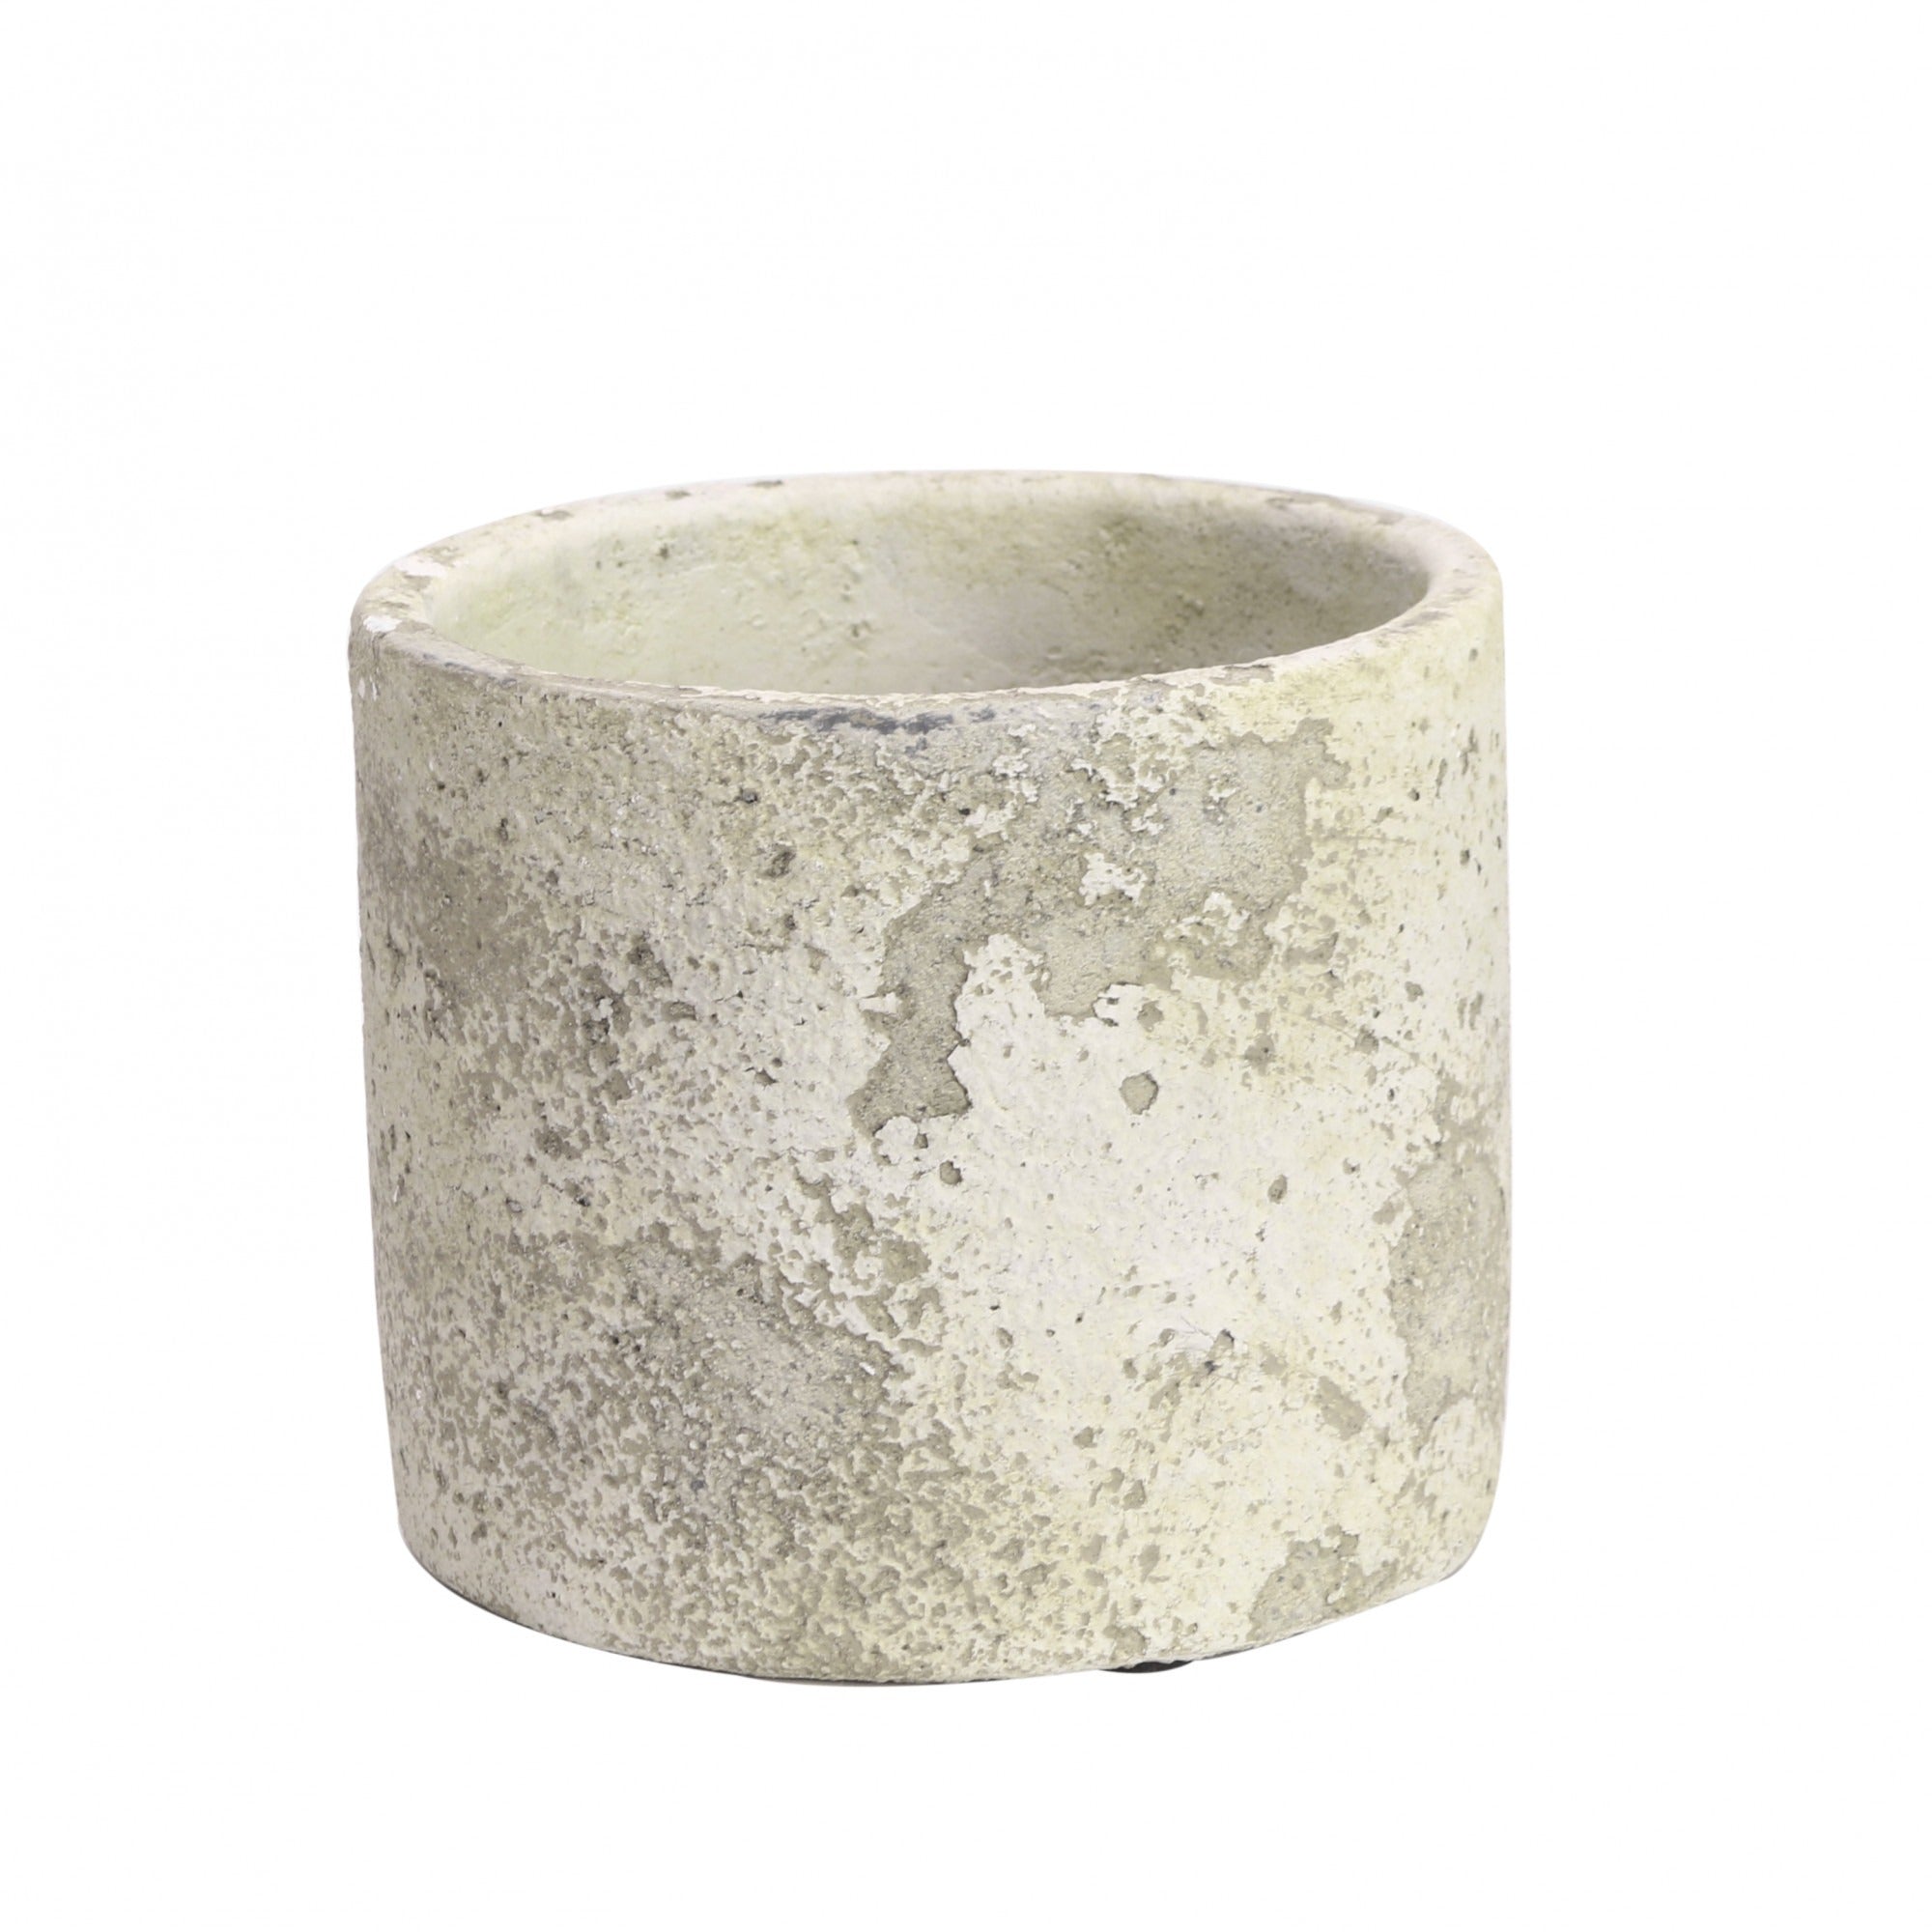 View Rustic Round Cement Flower Pot 11cm information